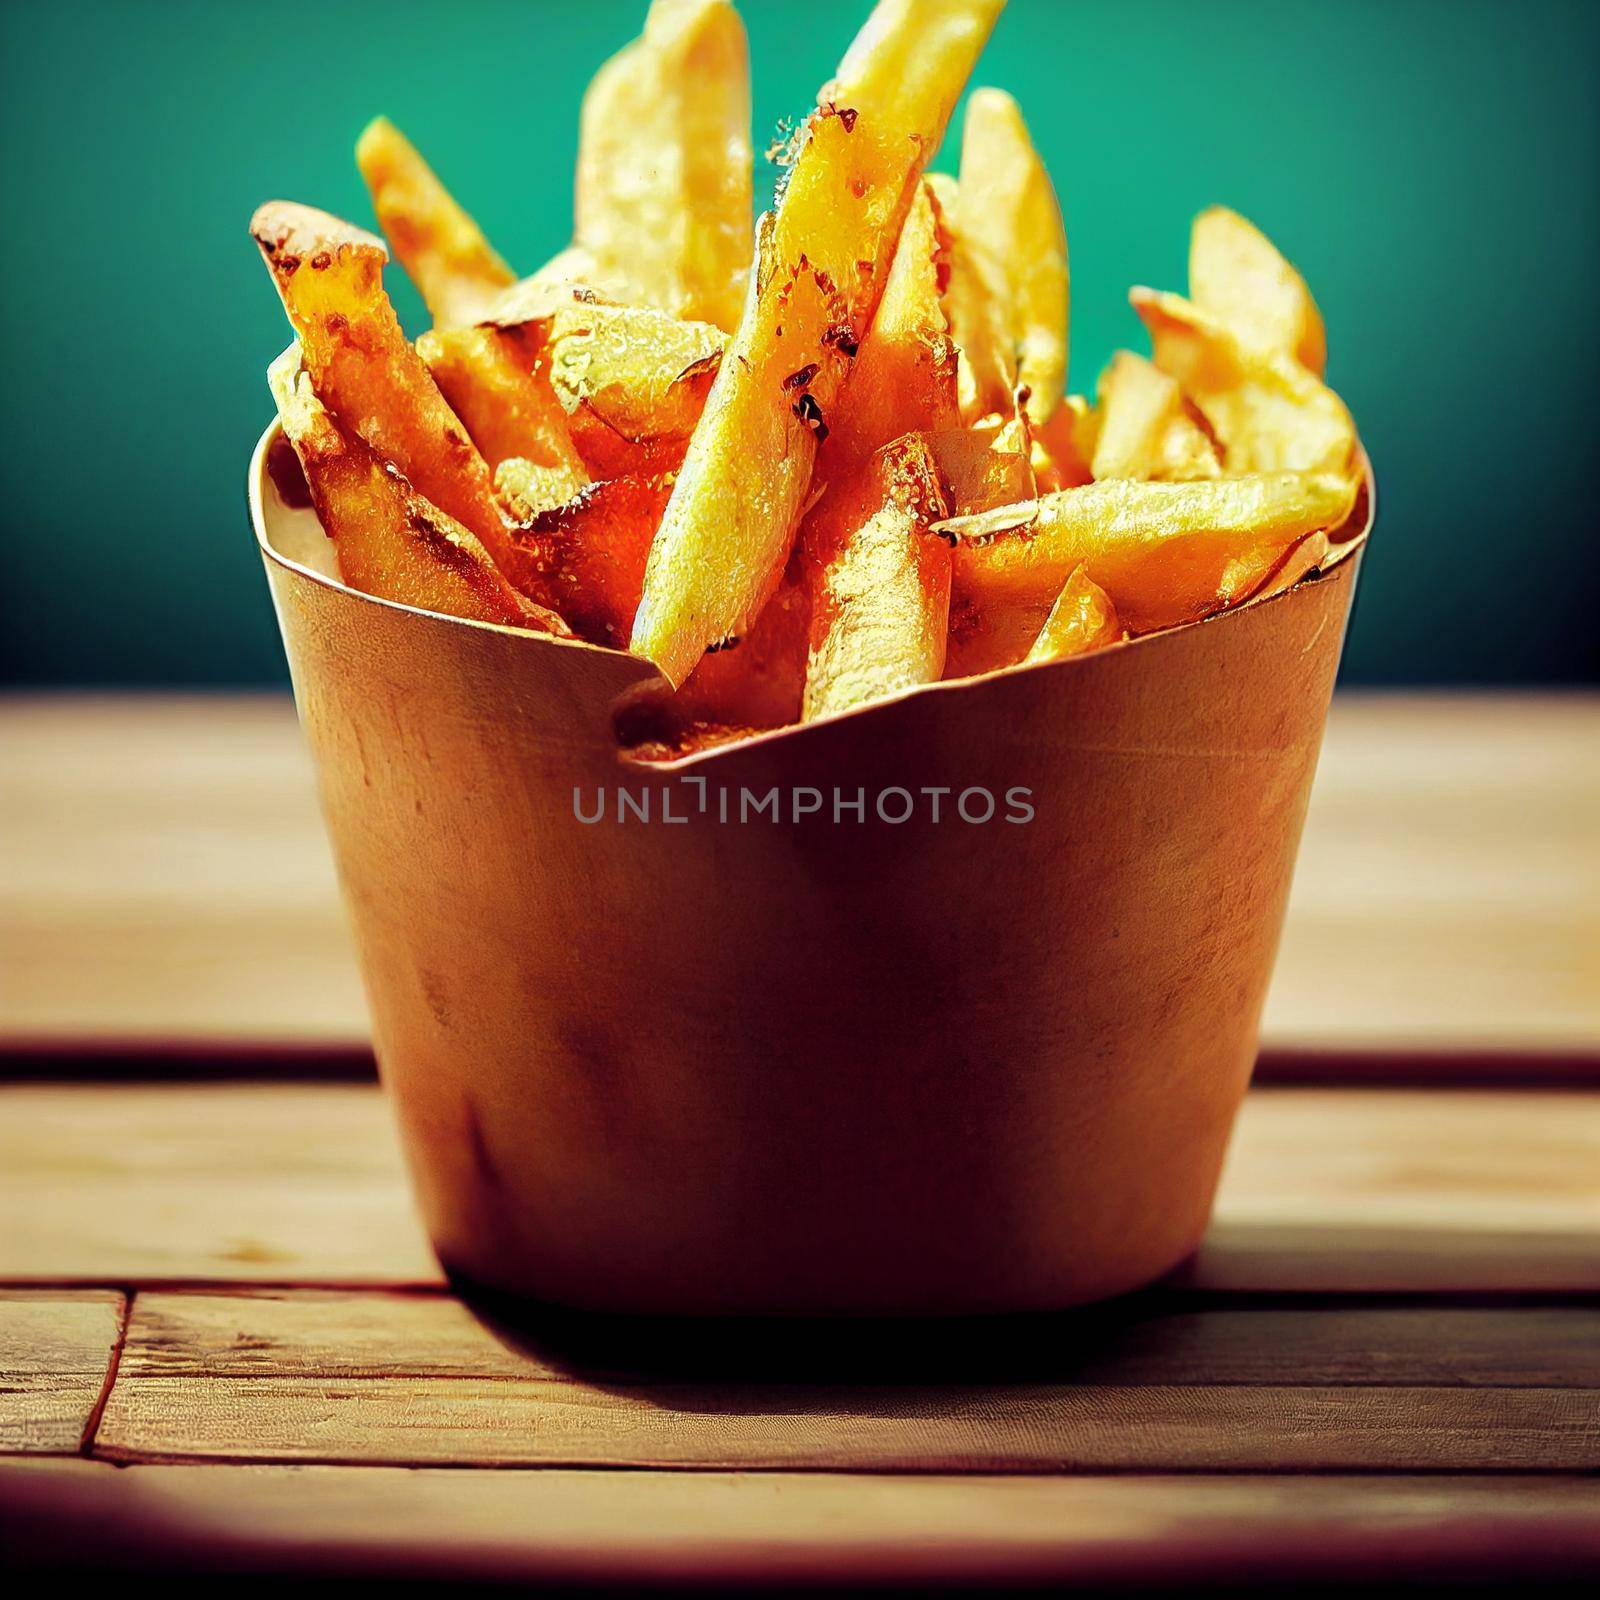 Tasty fresh hot french fries photorealistic 3D illustration by vmalafeevskiy